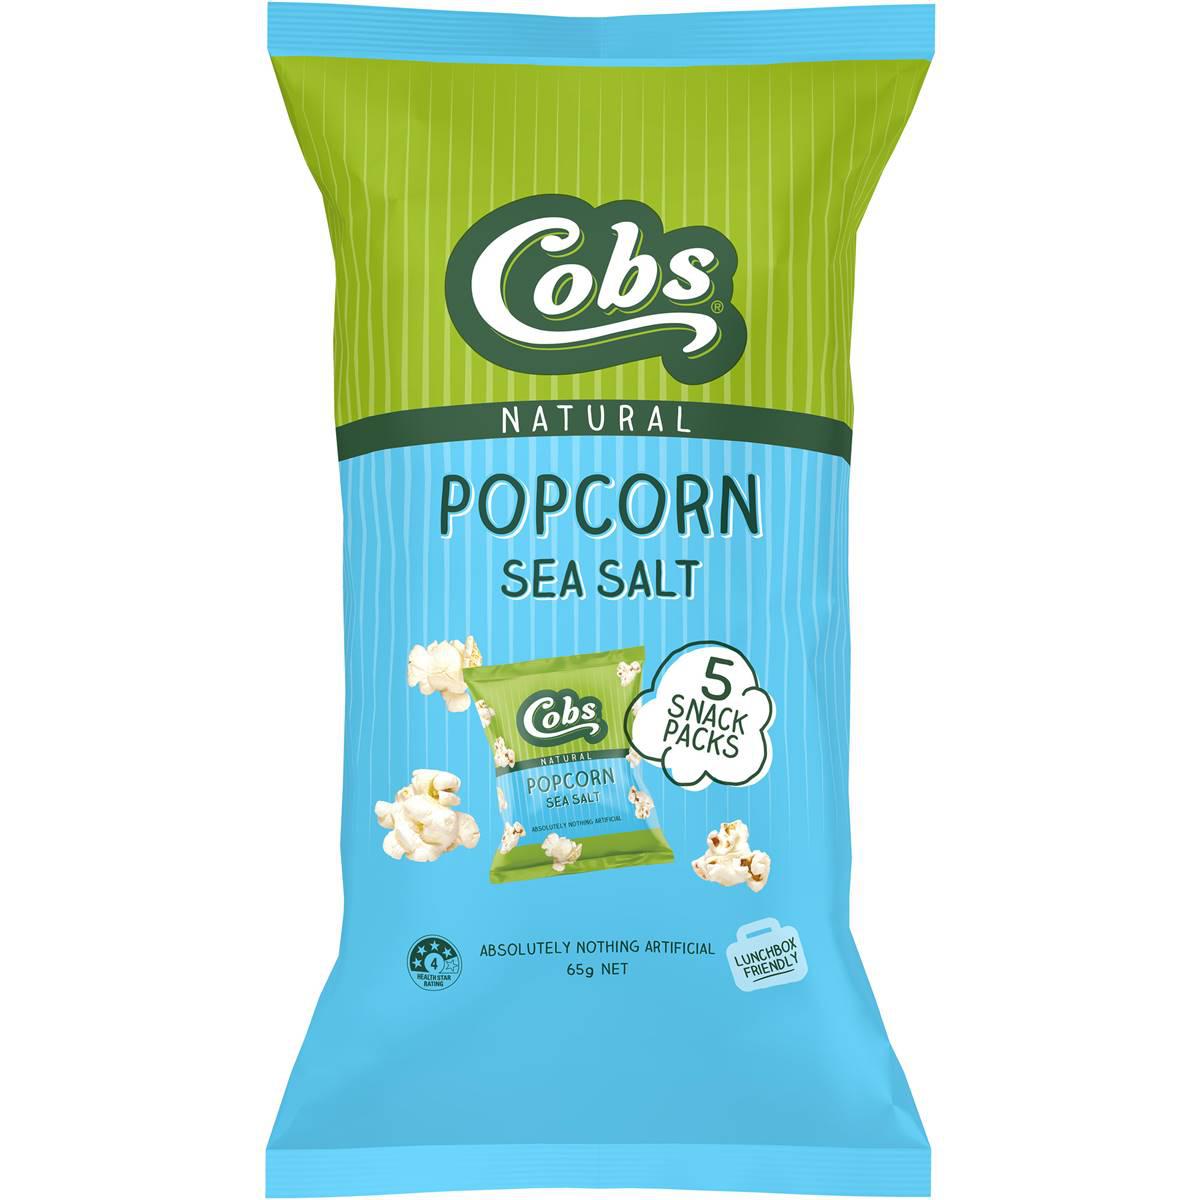 Cobs Natural Popcorn Sea Salt 5x13g